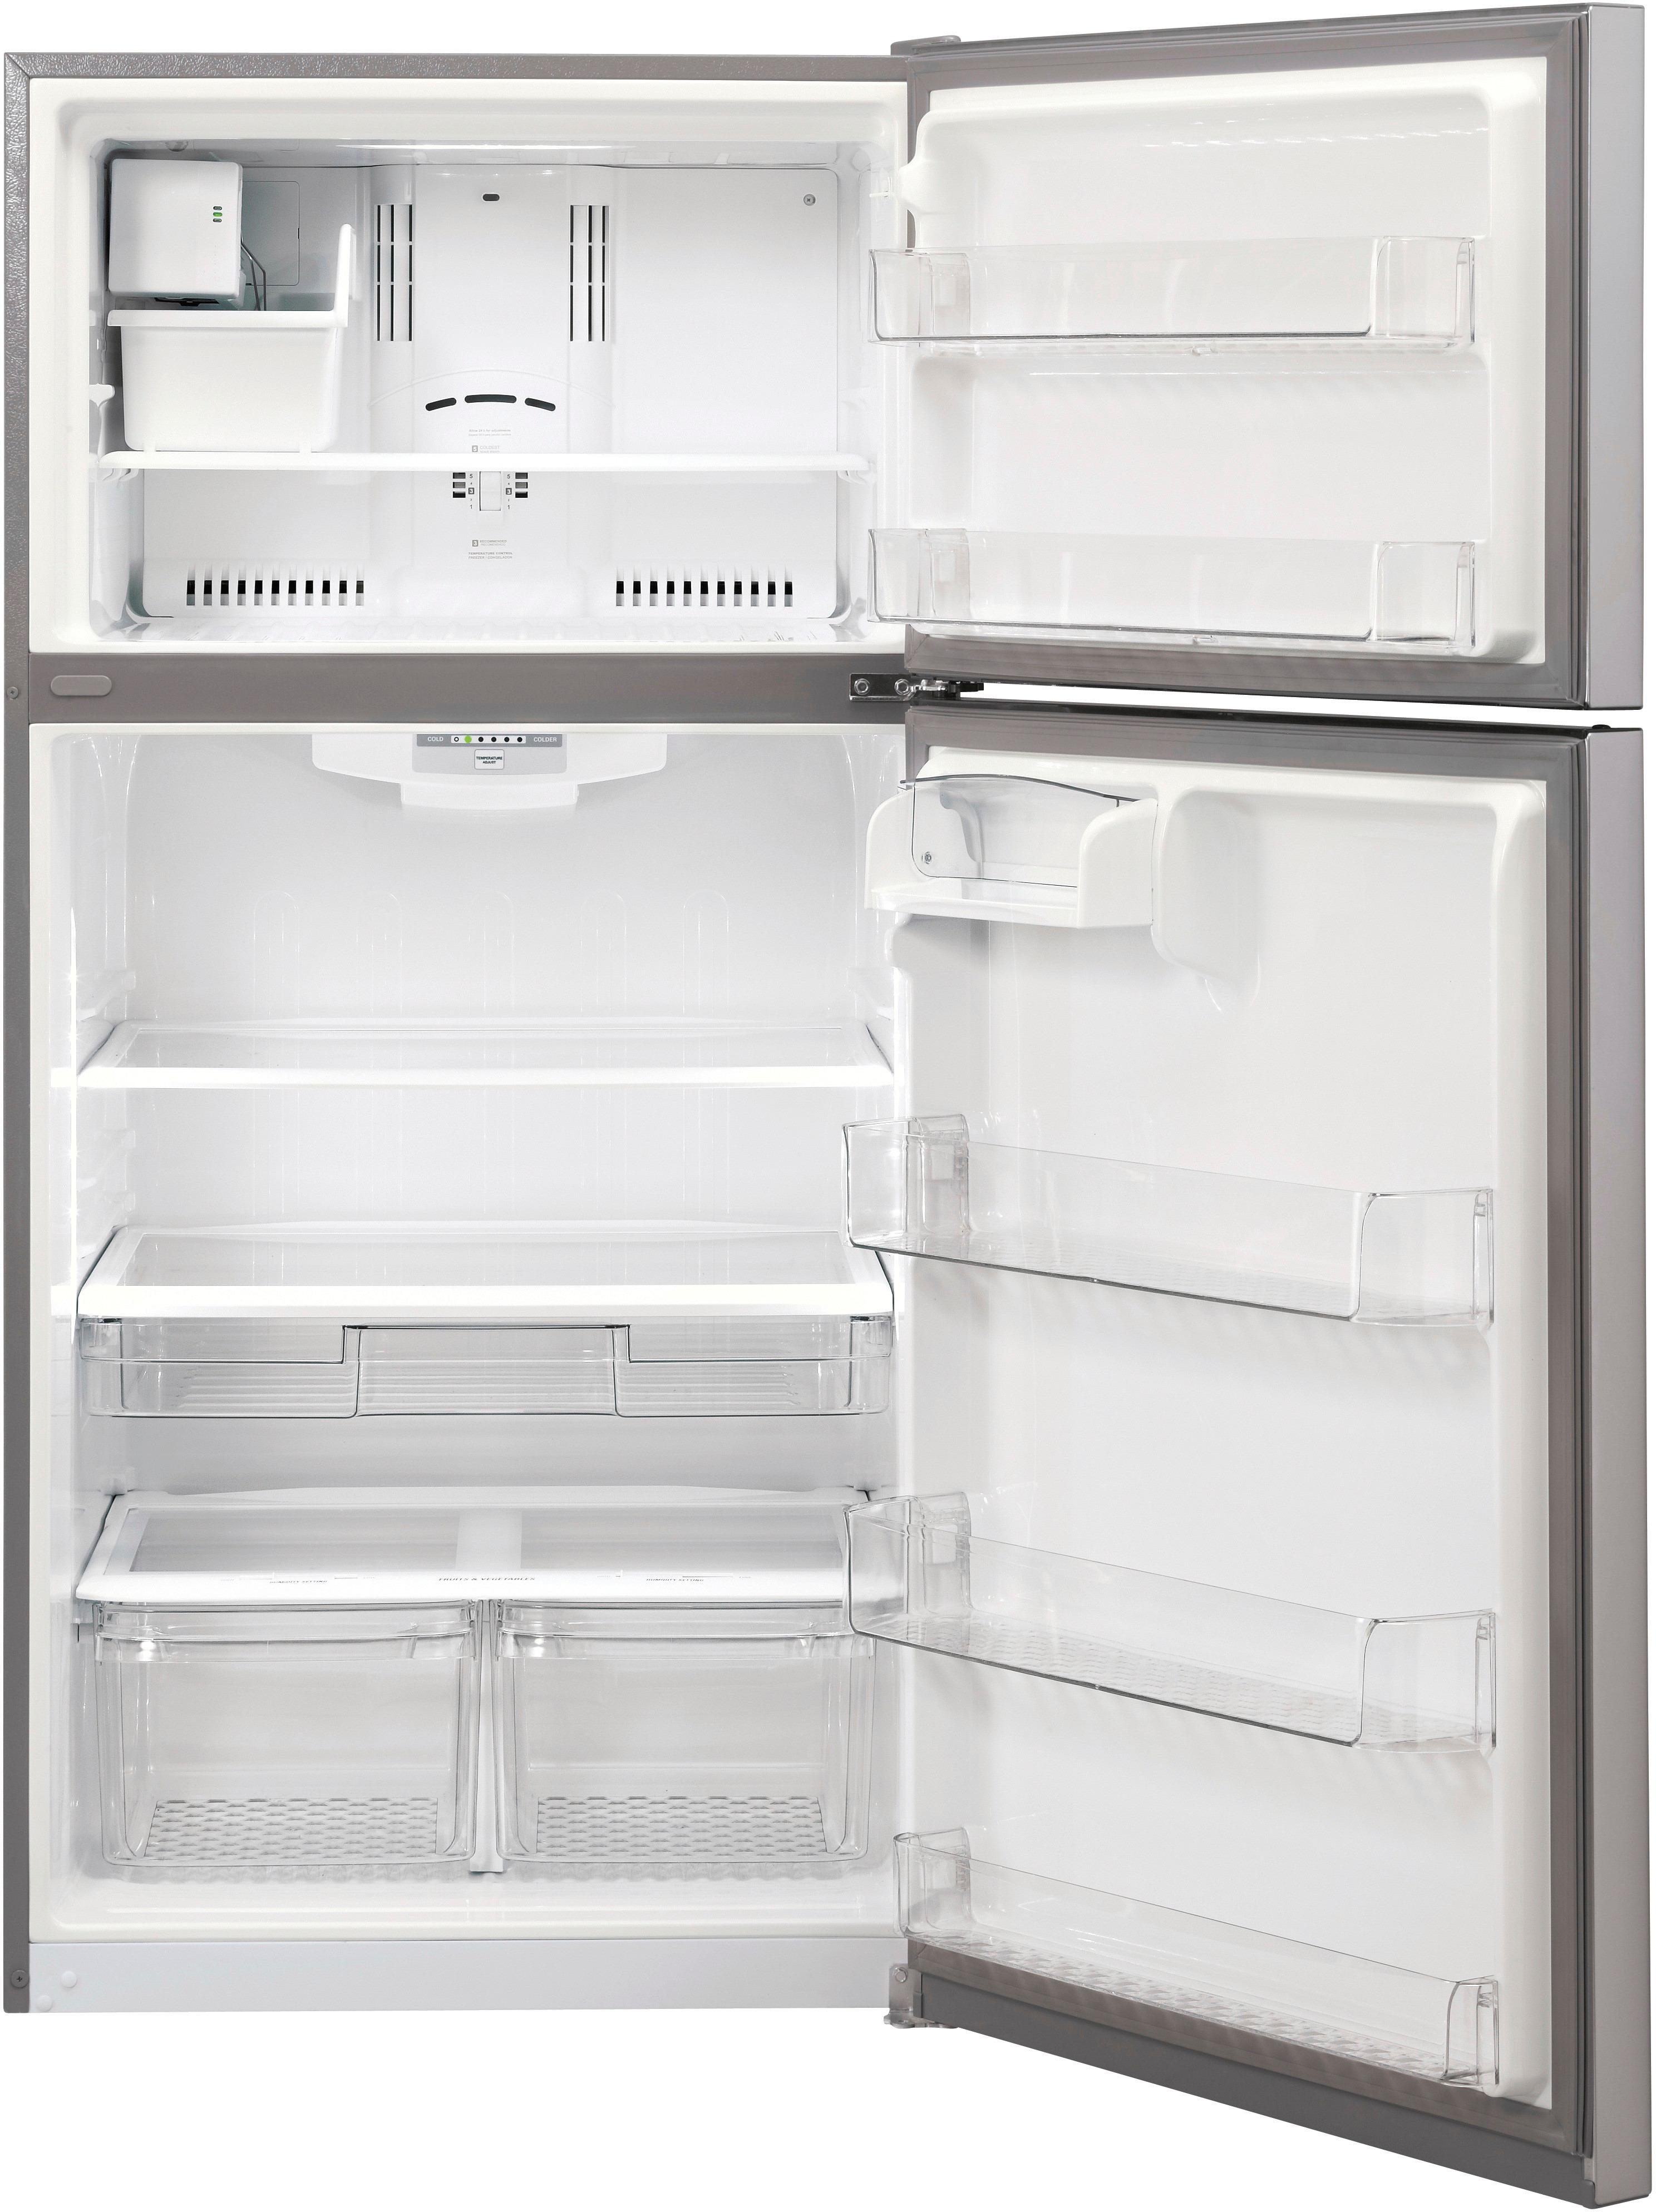 LG 20.2 Cu. Ft. Top-Freezer Refrigerator Stainless steel LTCS20220S ...